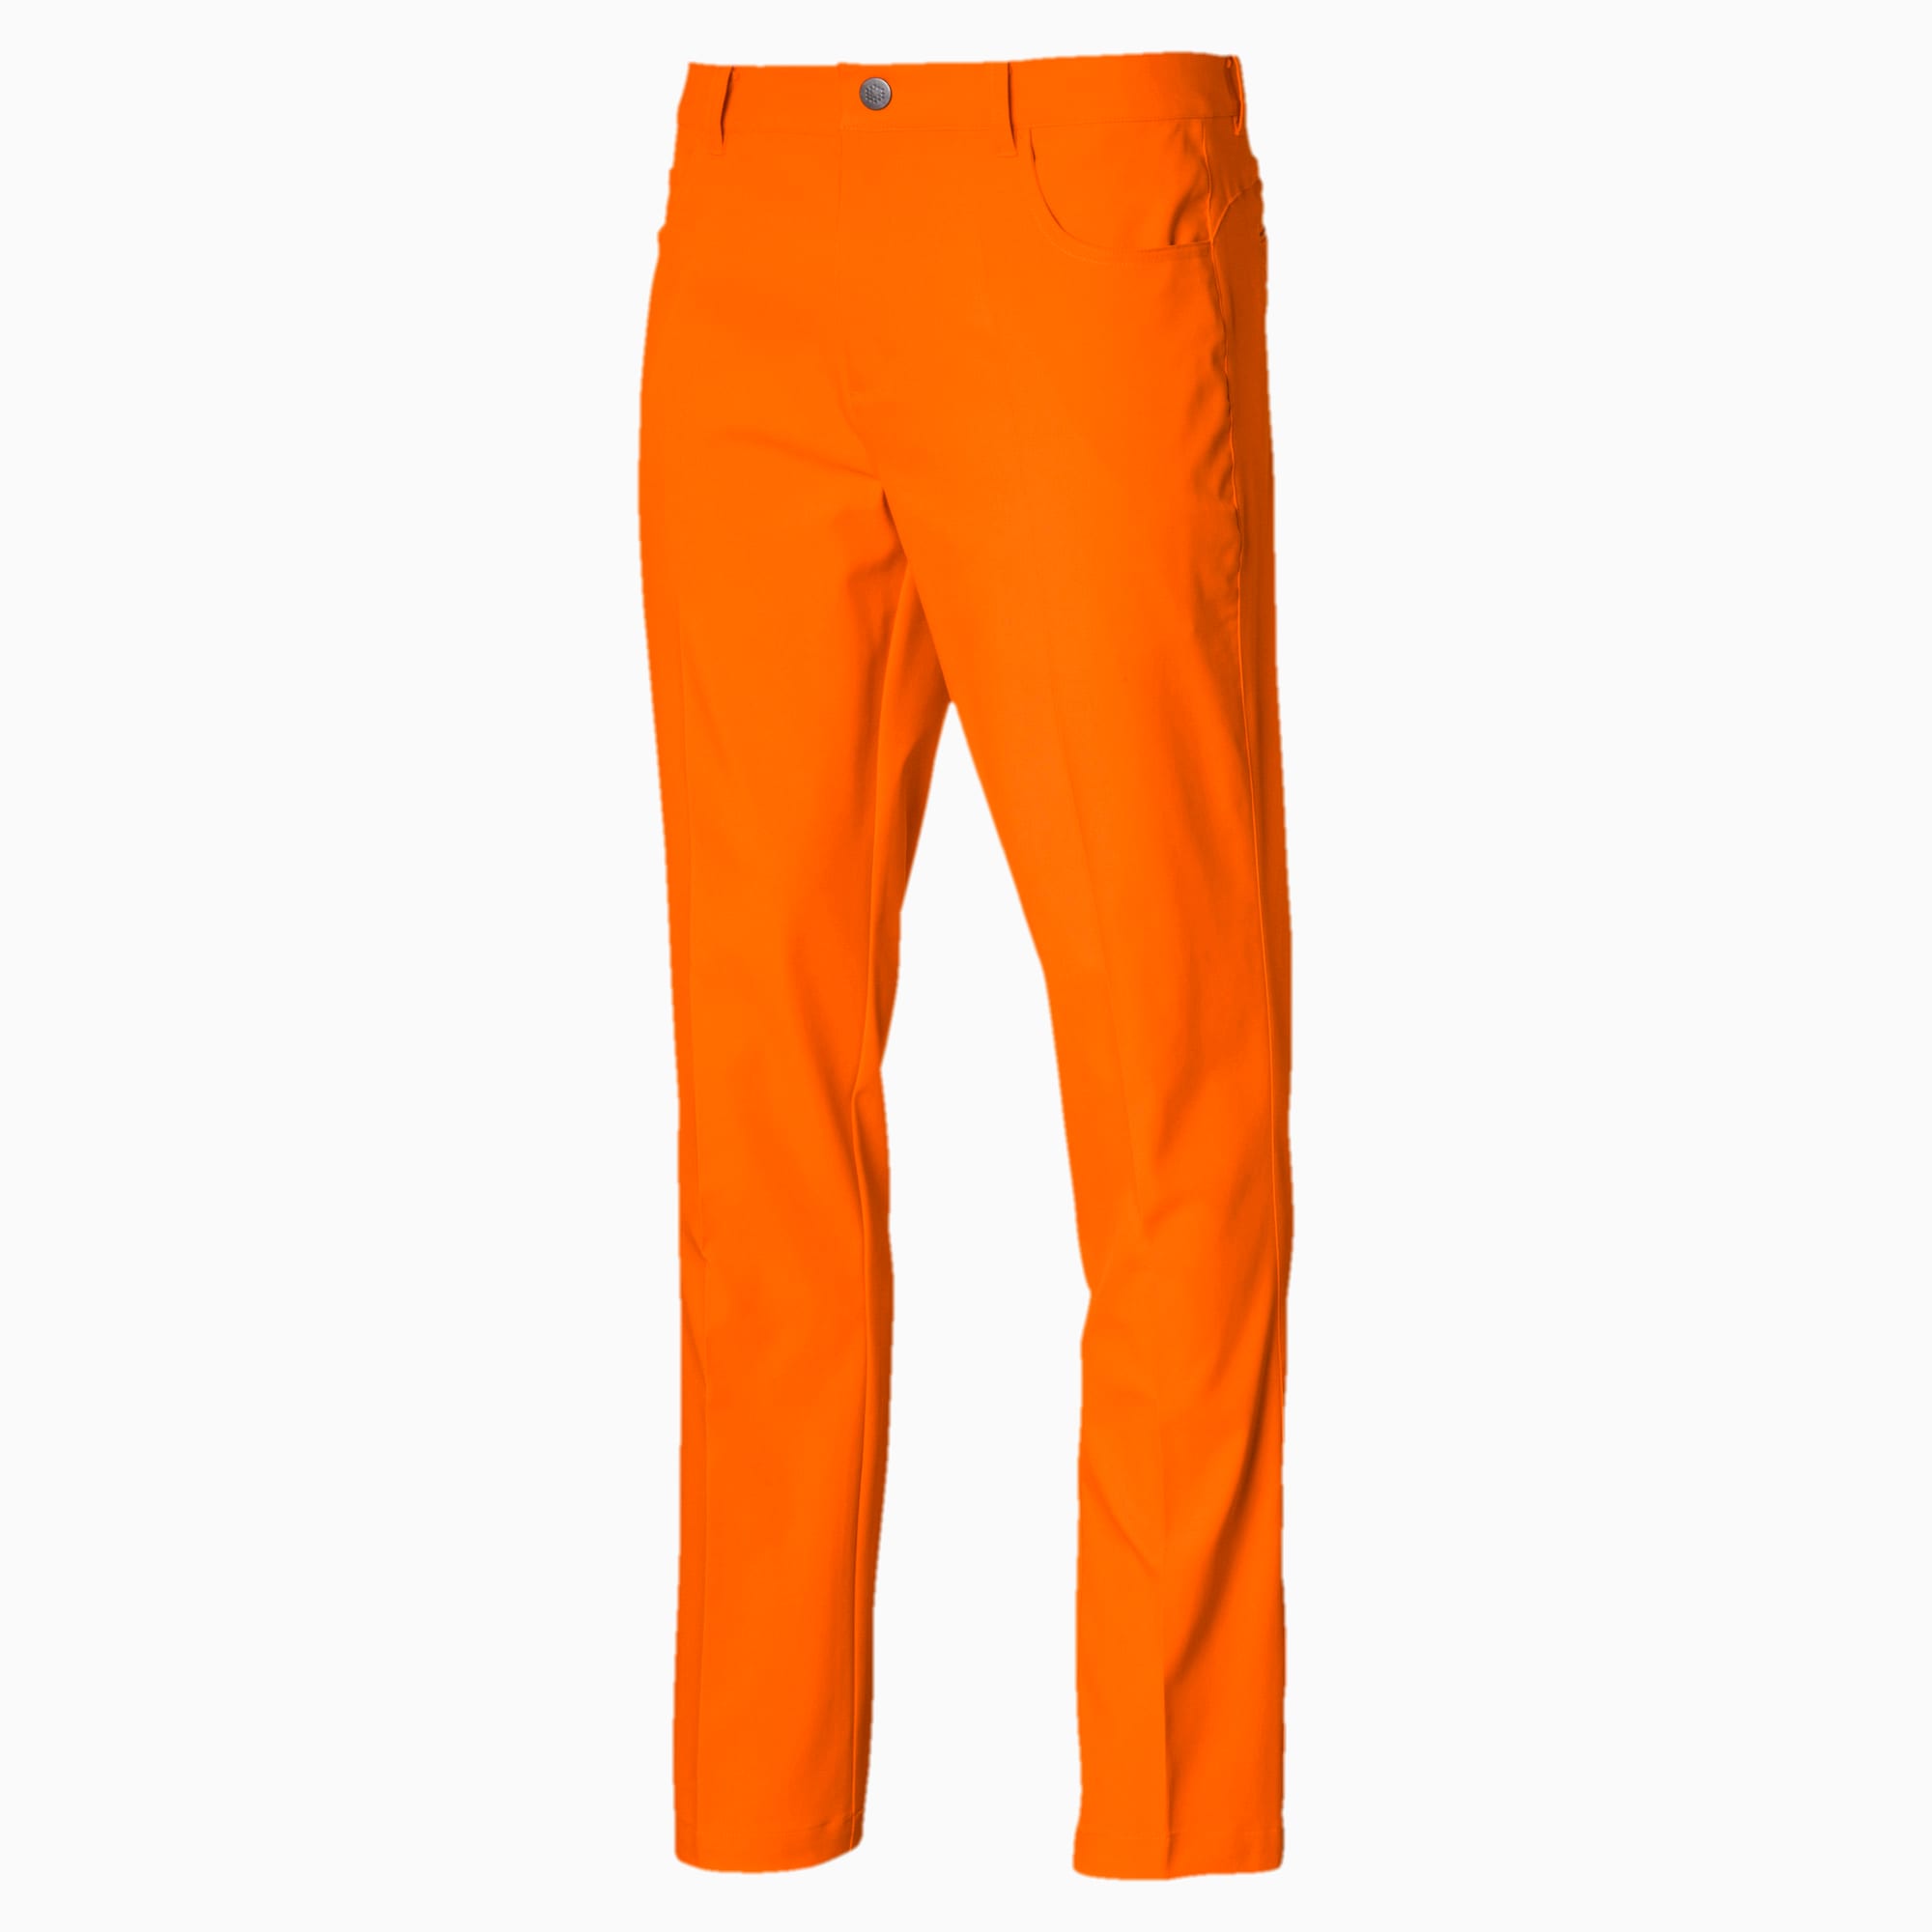 puma vibrant orange pants